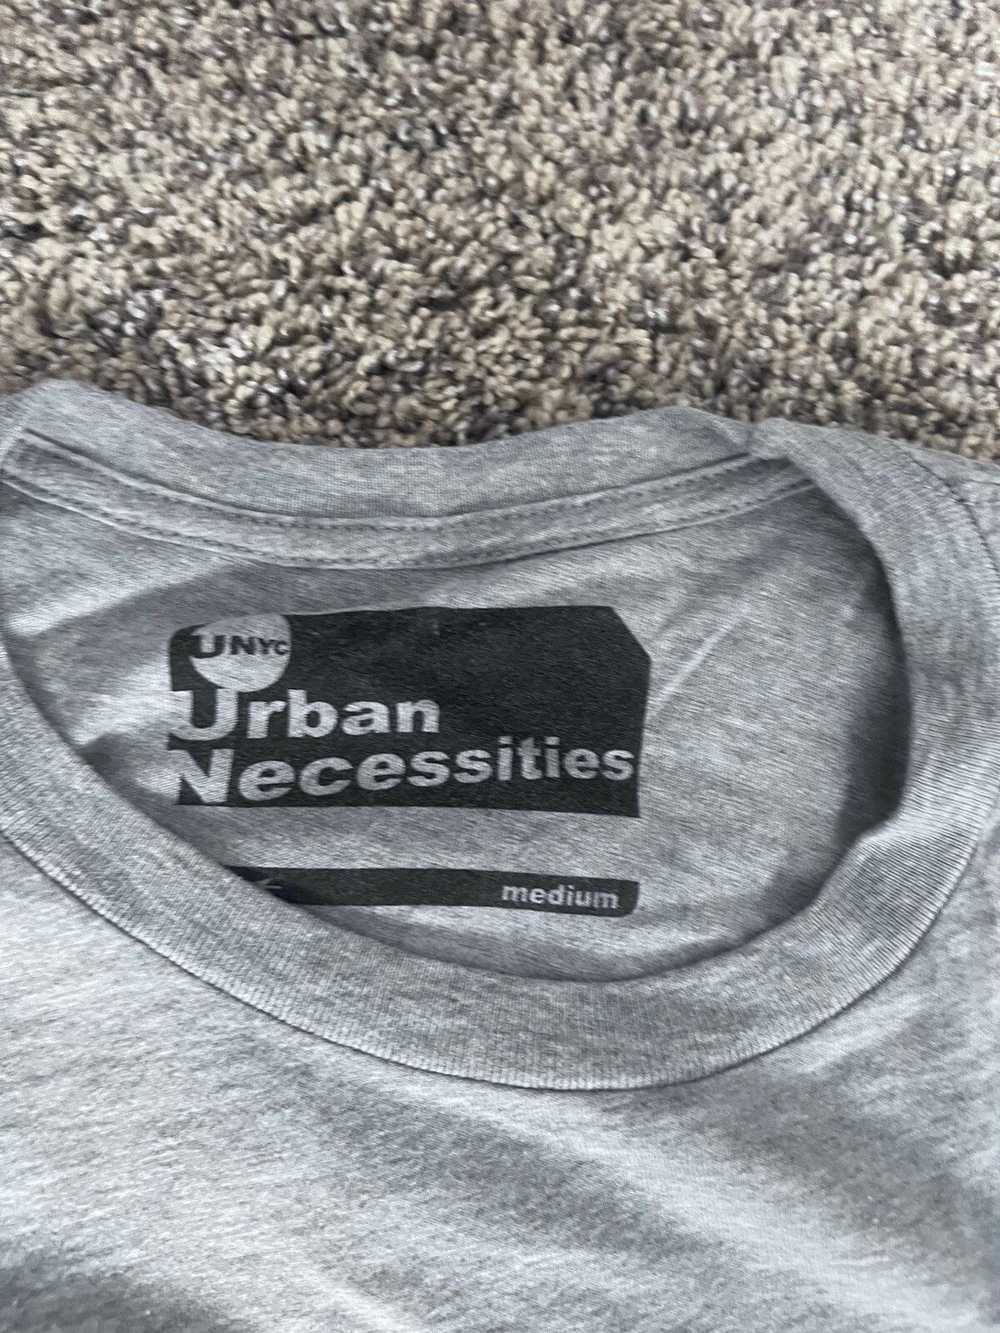 Designer Urban necessities stamp shirt - image 2